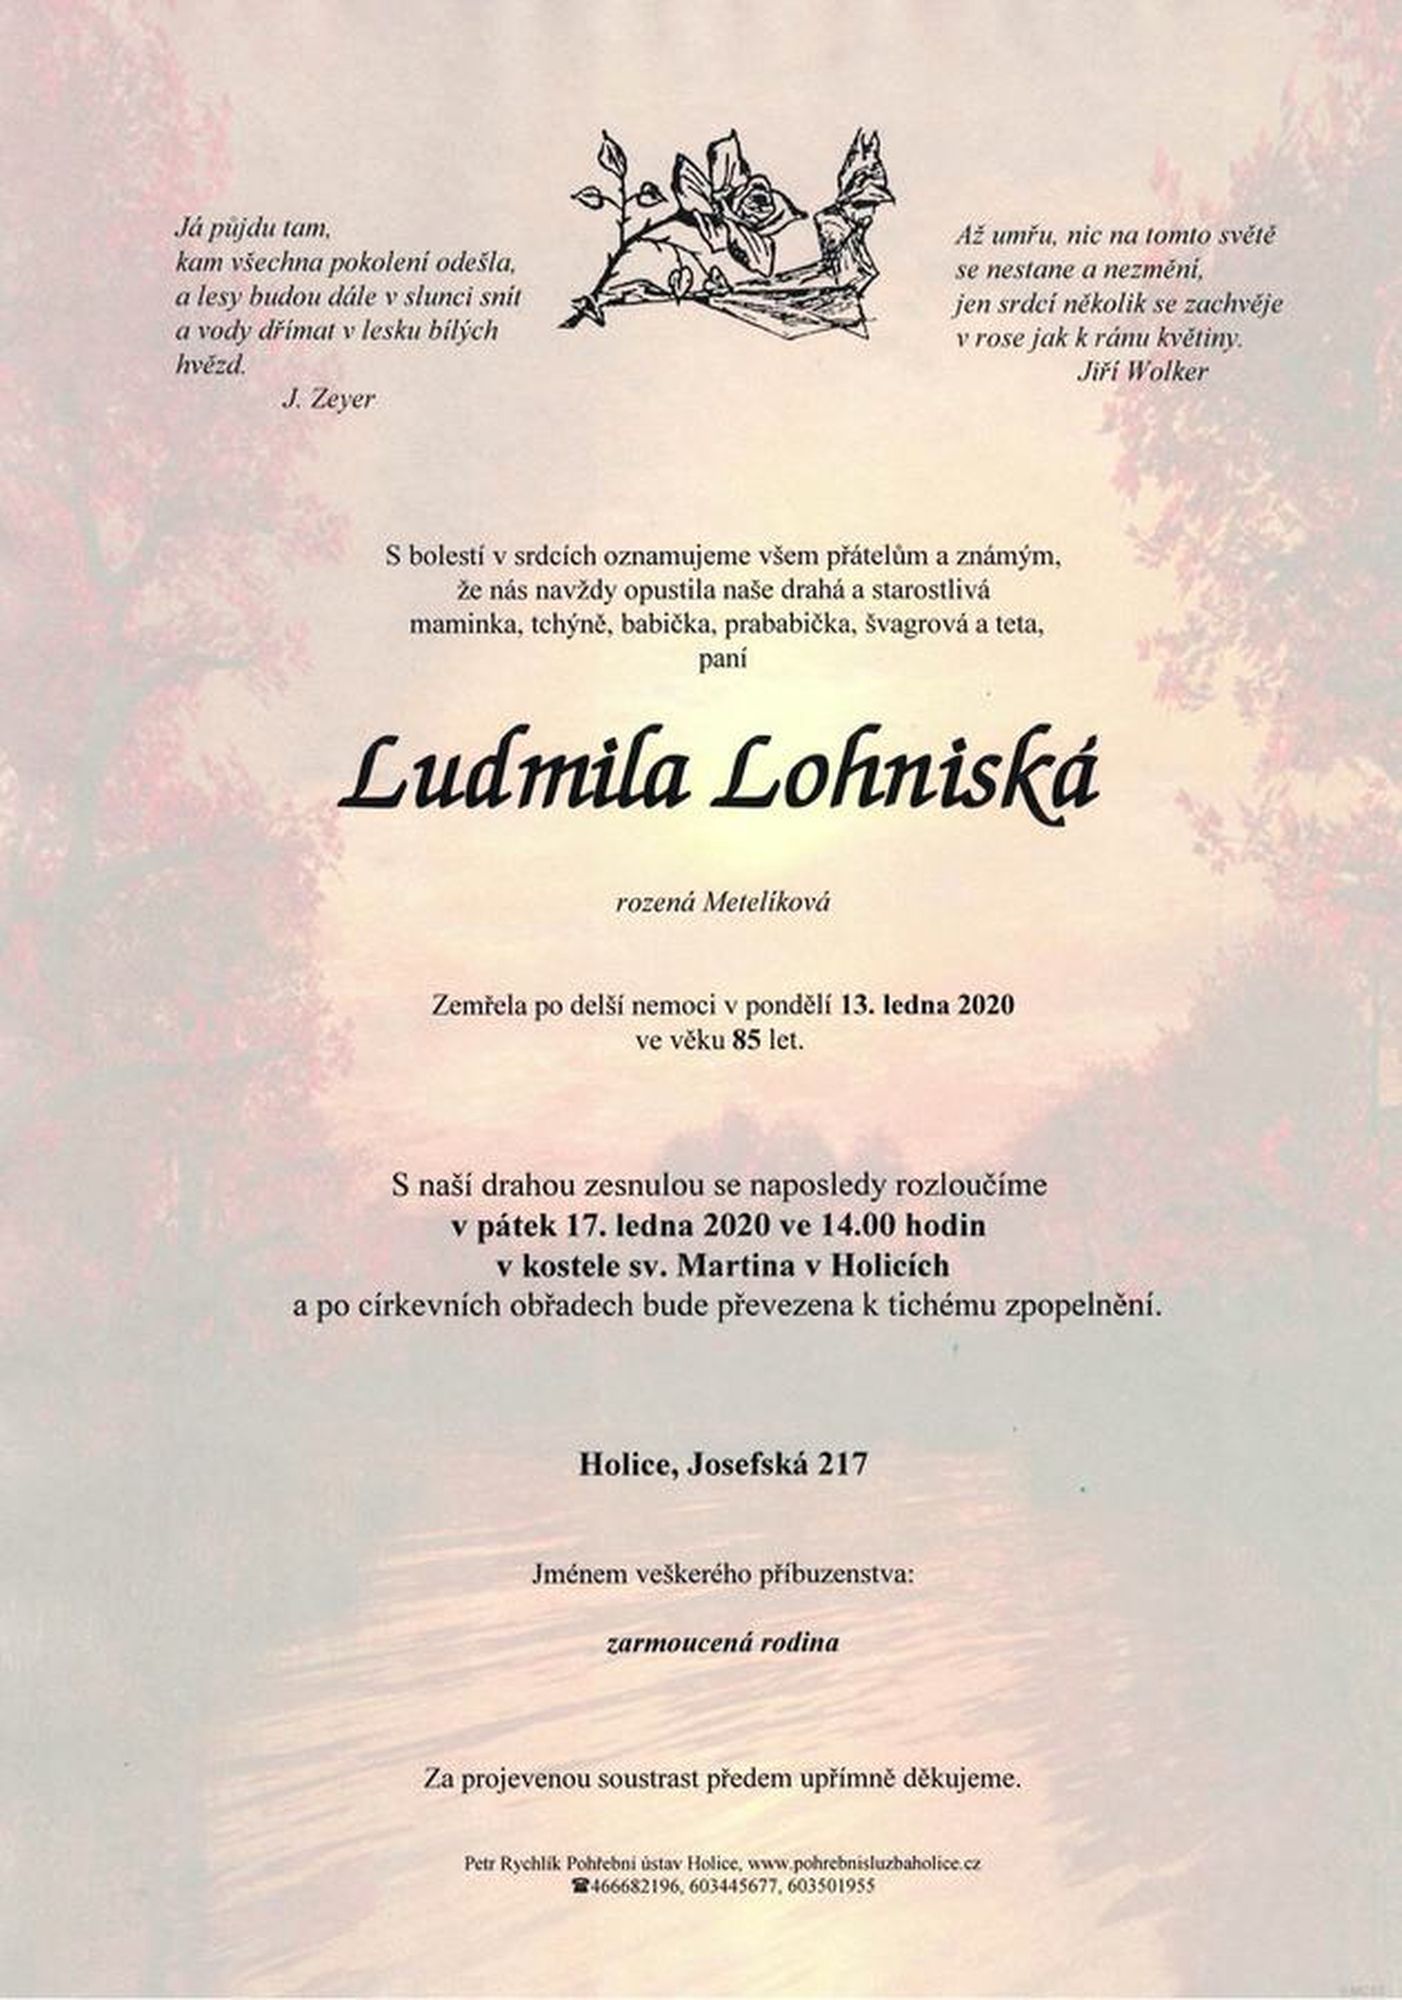 Ludmila Lohniská